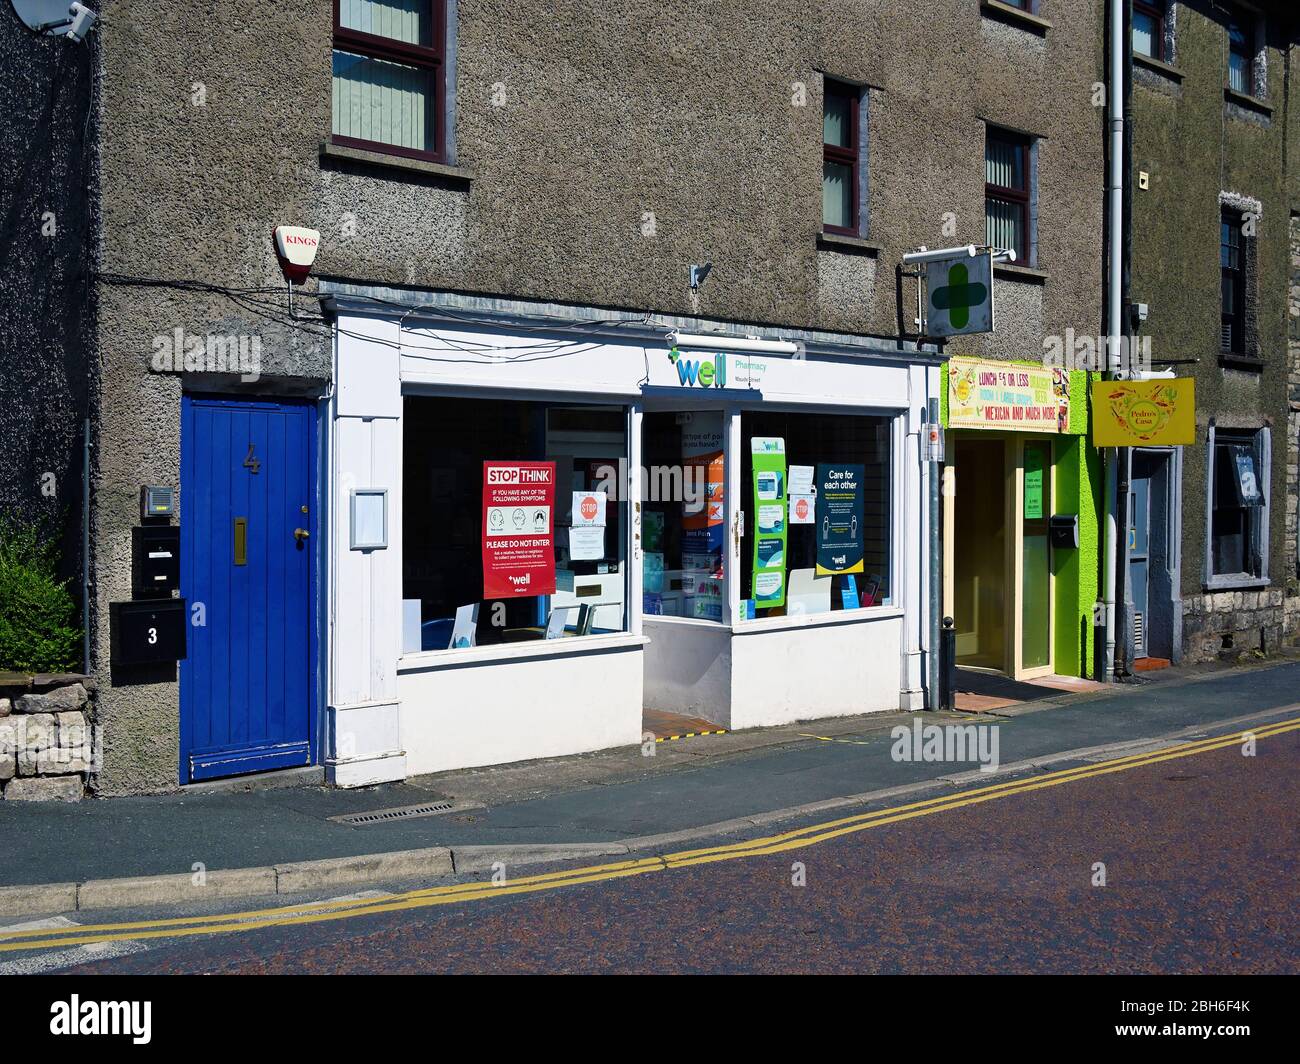 Well Pharmacy and Pedro's Casa. Maude Street, Kendal, Cumbria, England, United Kingdom, Europe. Stock Photo